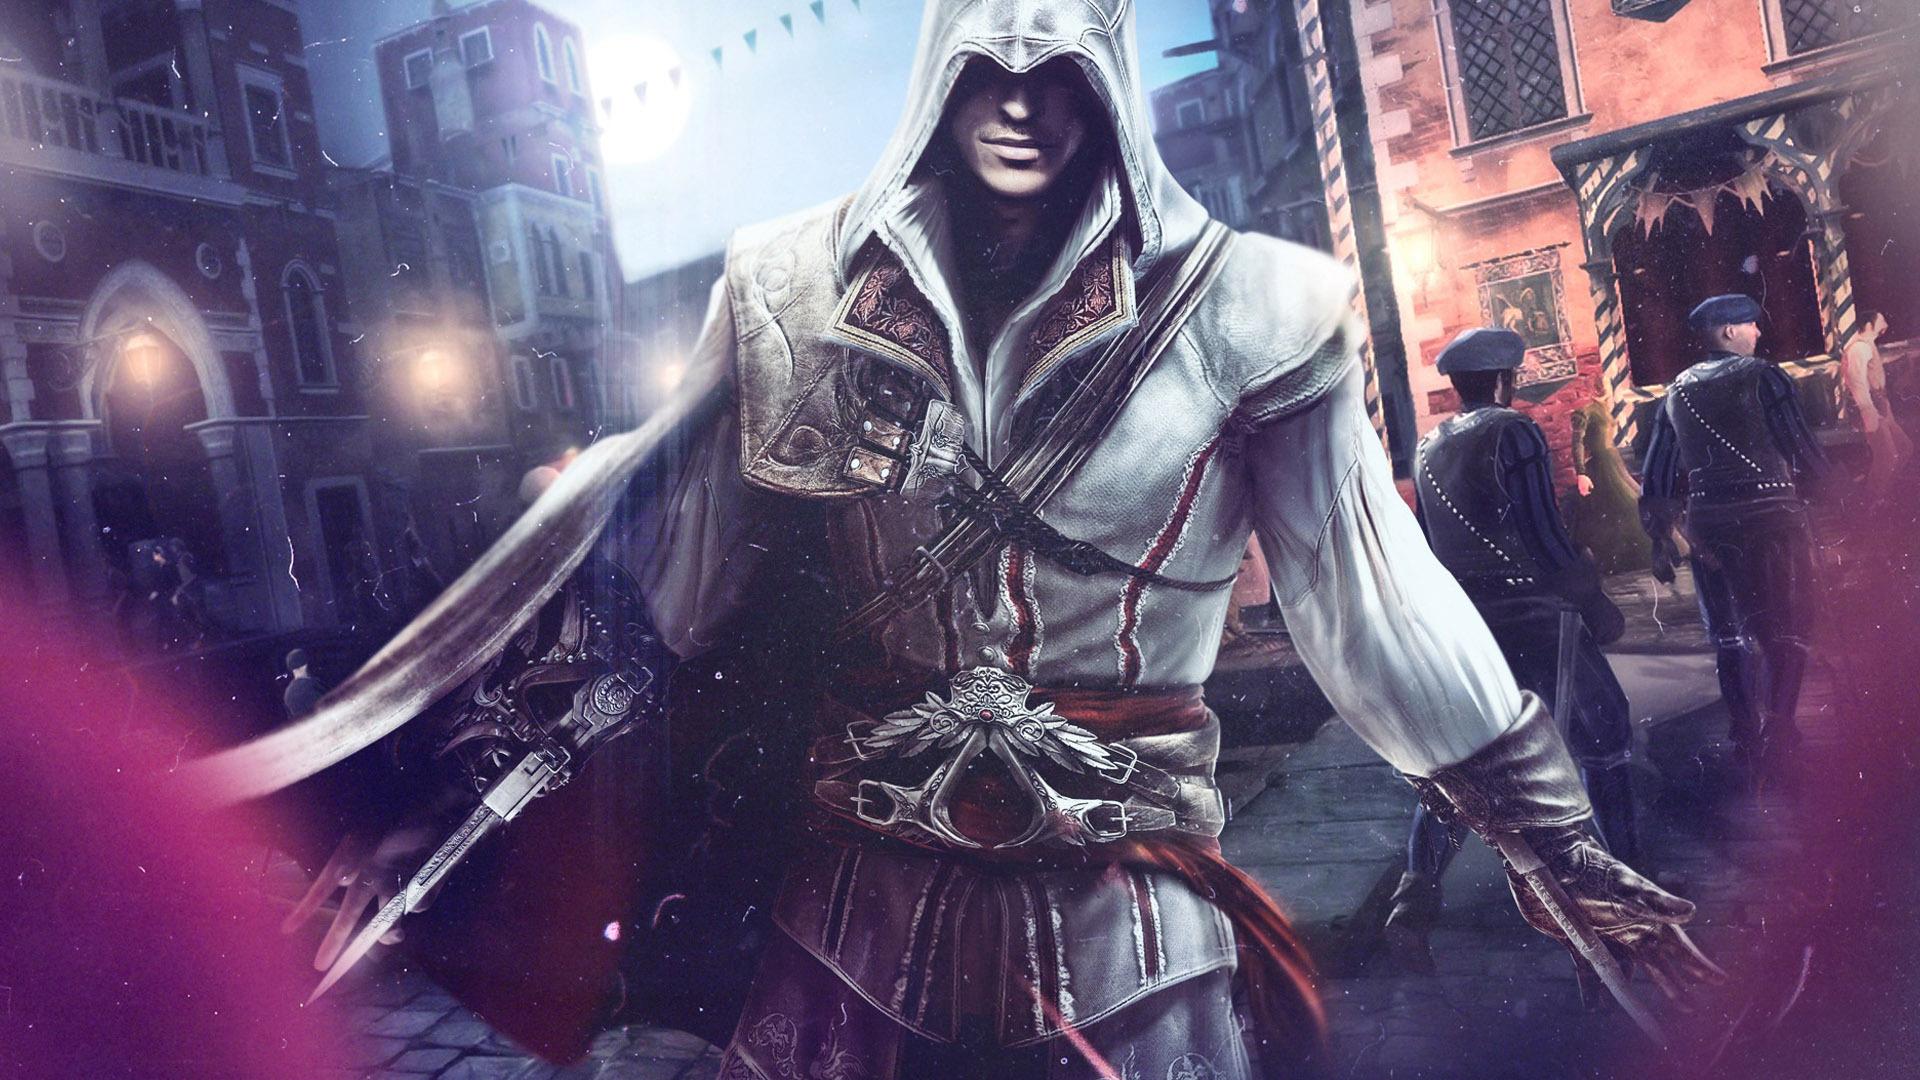 Download Assassins Creed II wallpaper 10998 [1920x1080]